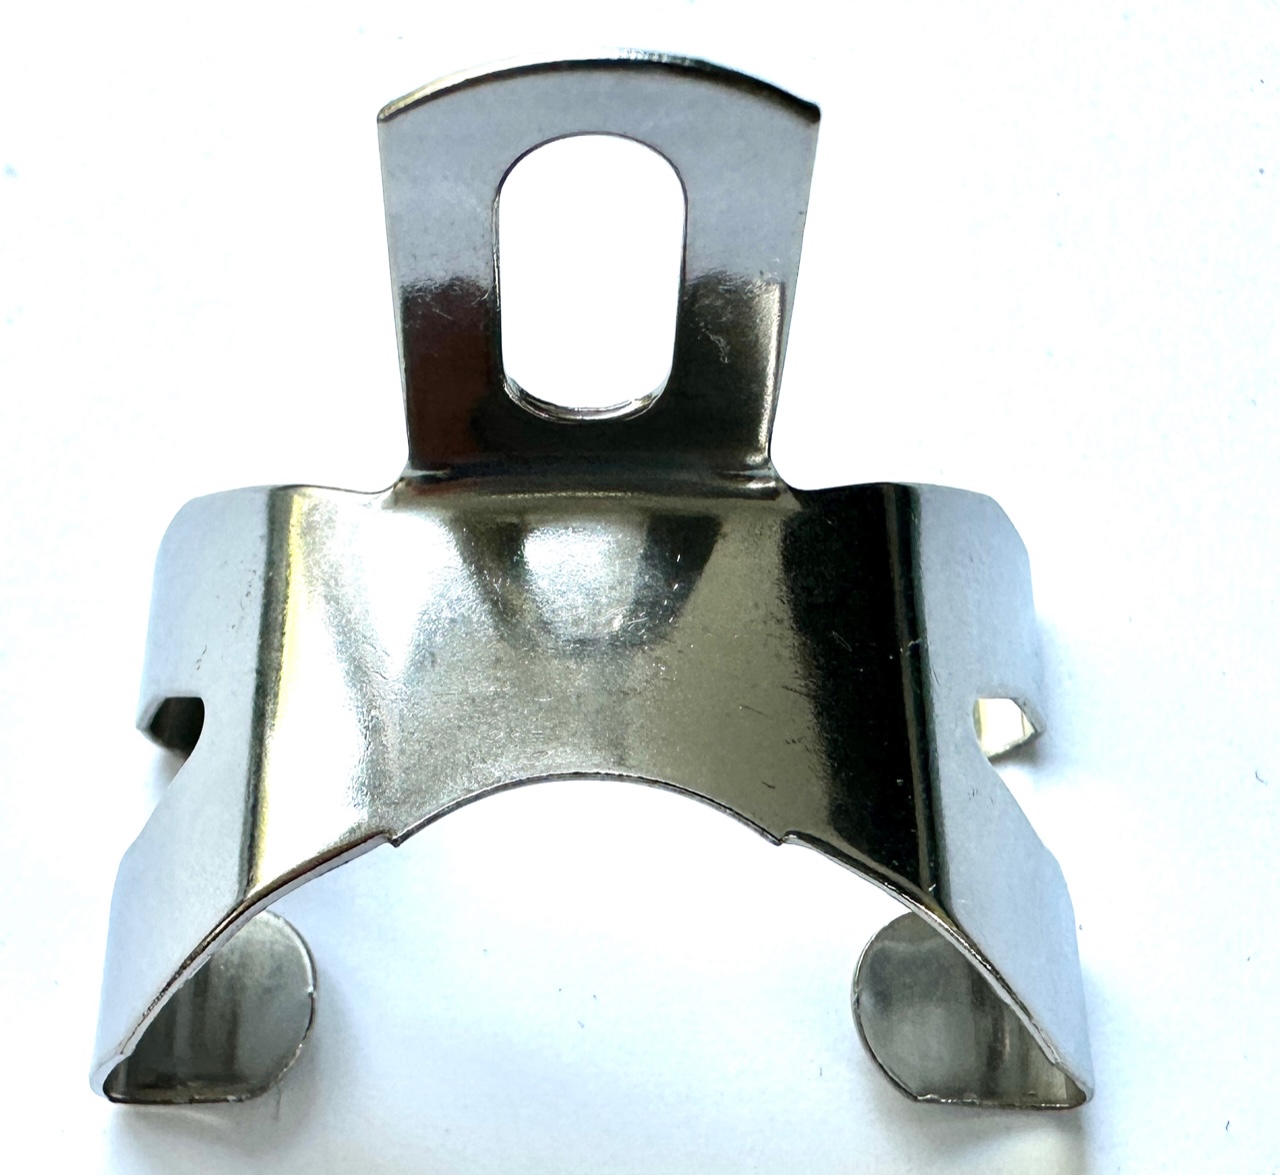 Ponticello universale per parafanghi acciaio inox 40 mm